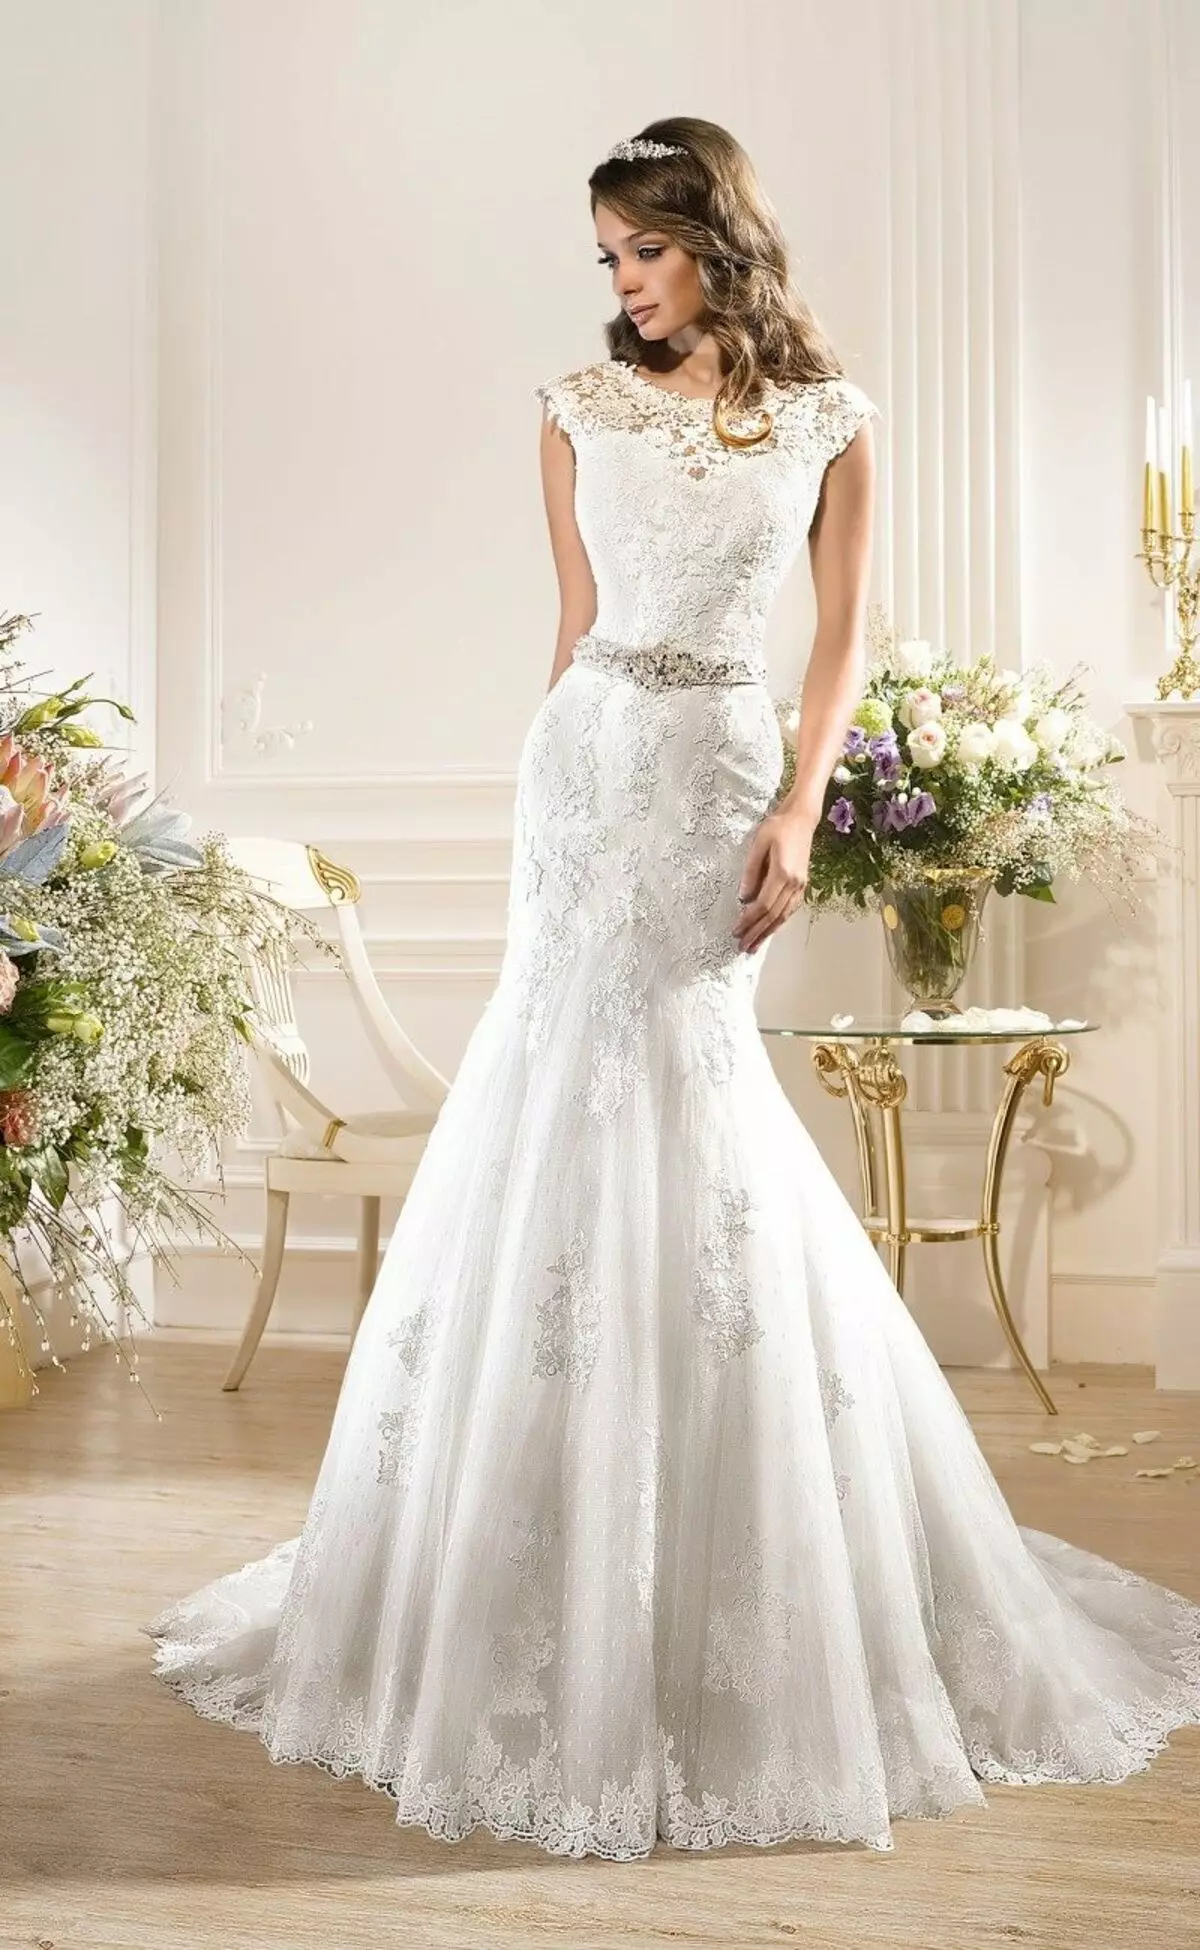 Gaun pengantin putri duyung dari koleksi idylly dari naviblue bridal